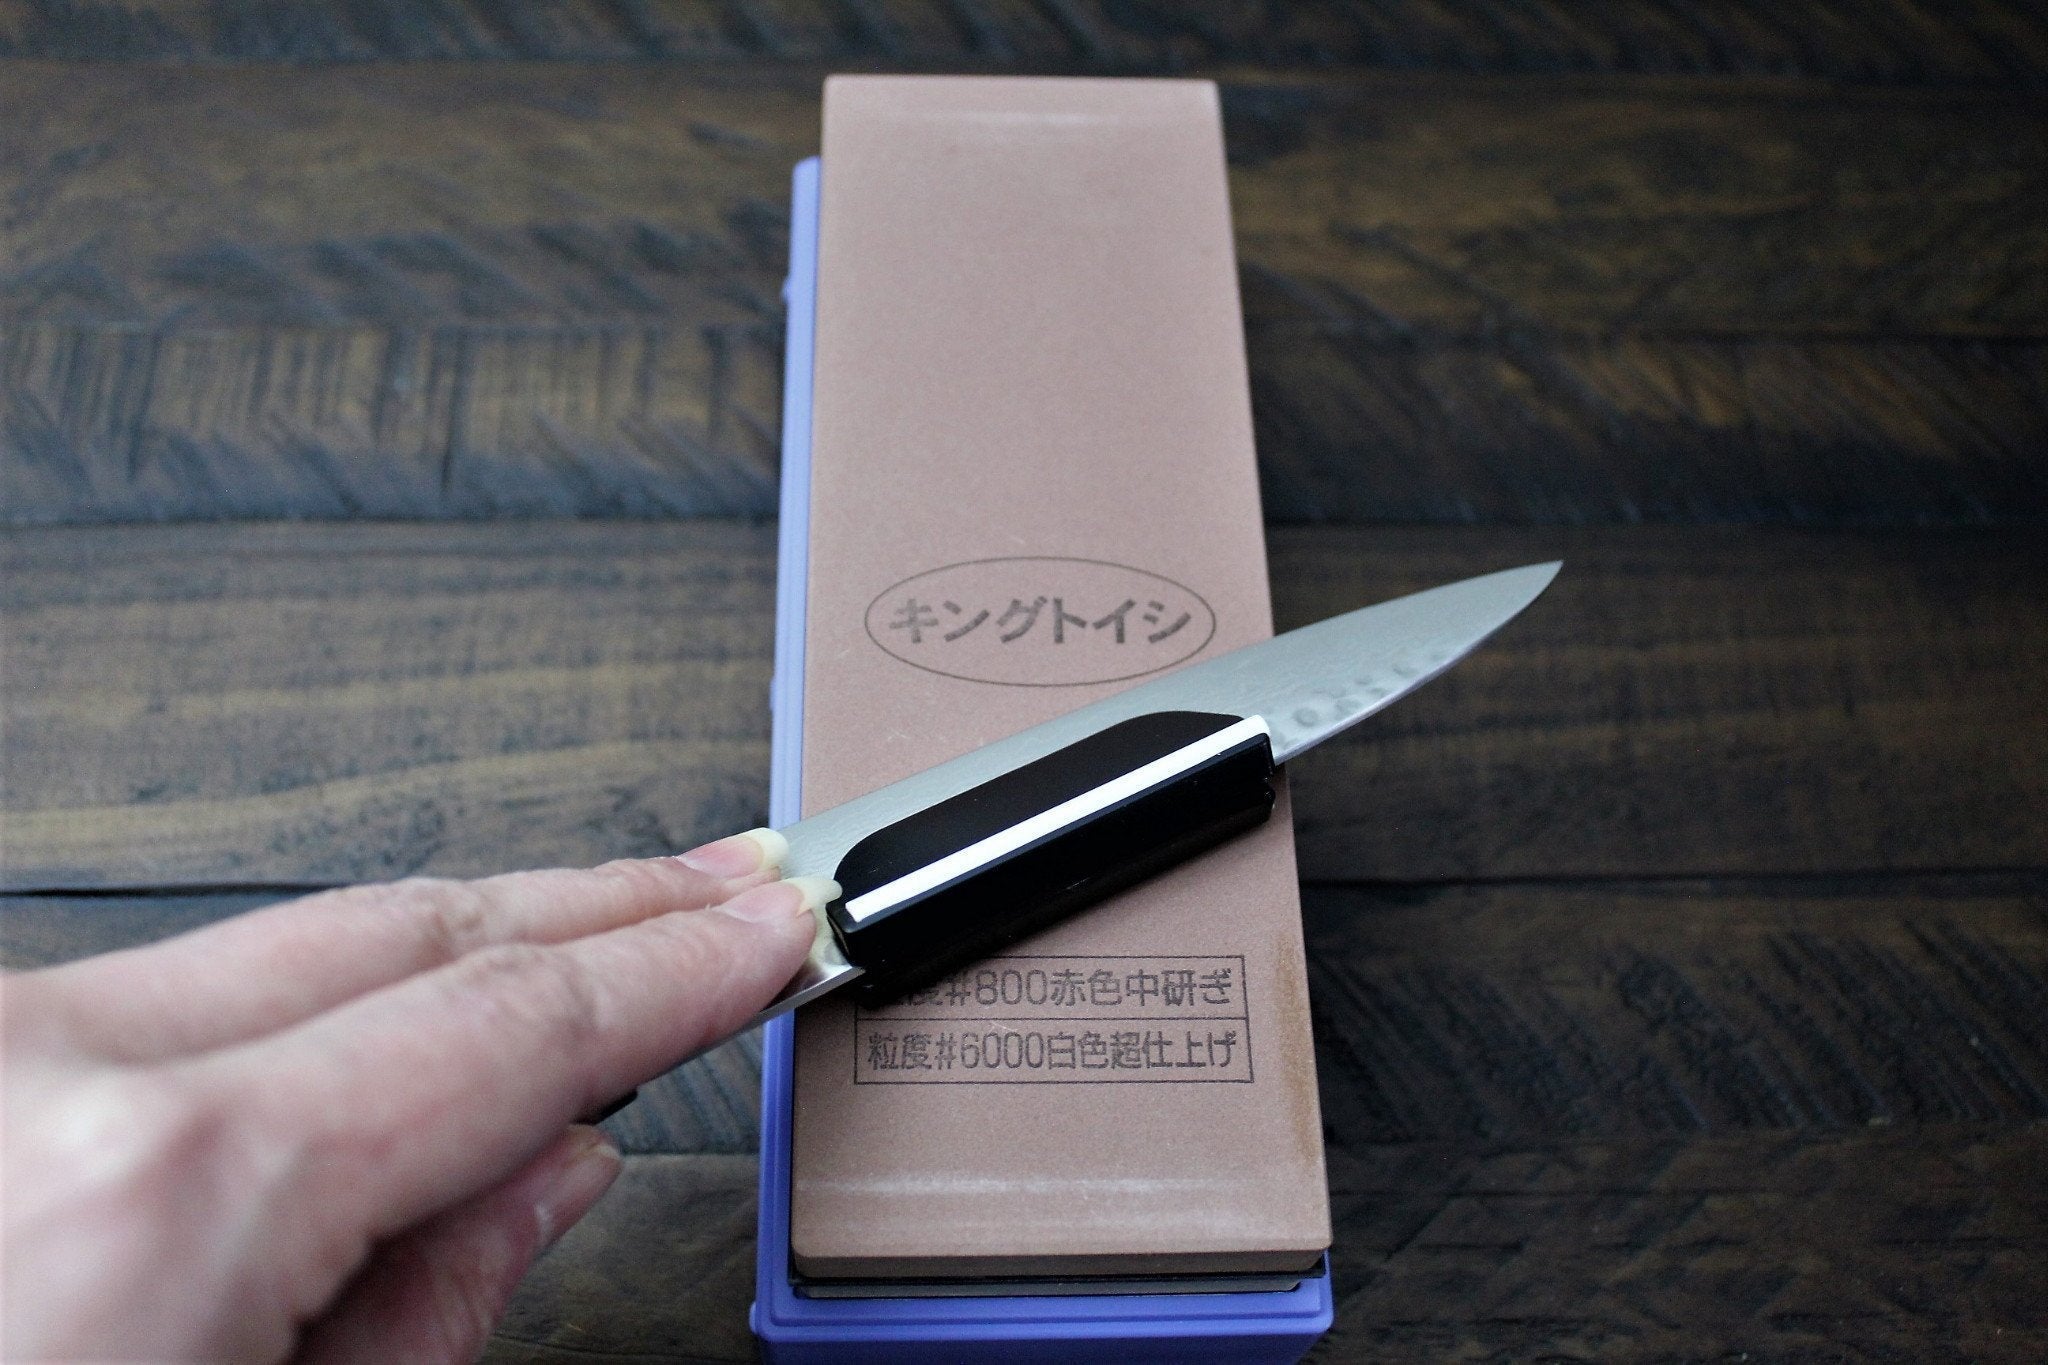 Naniwa, Whetstone Knife Sharpening Guide